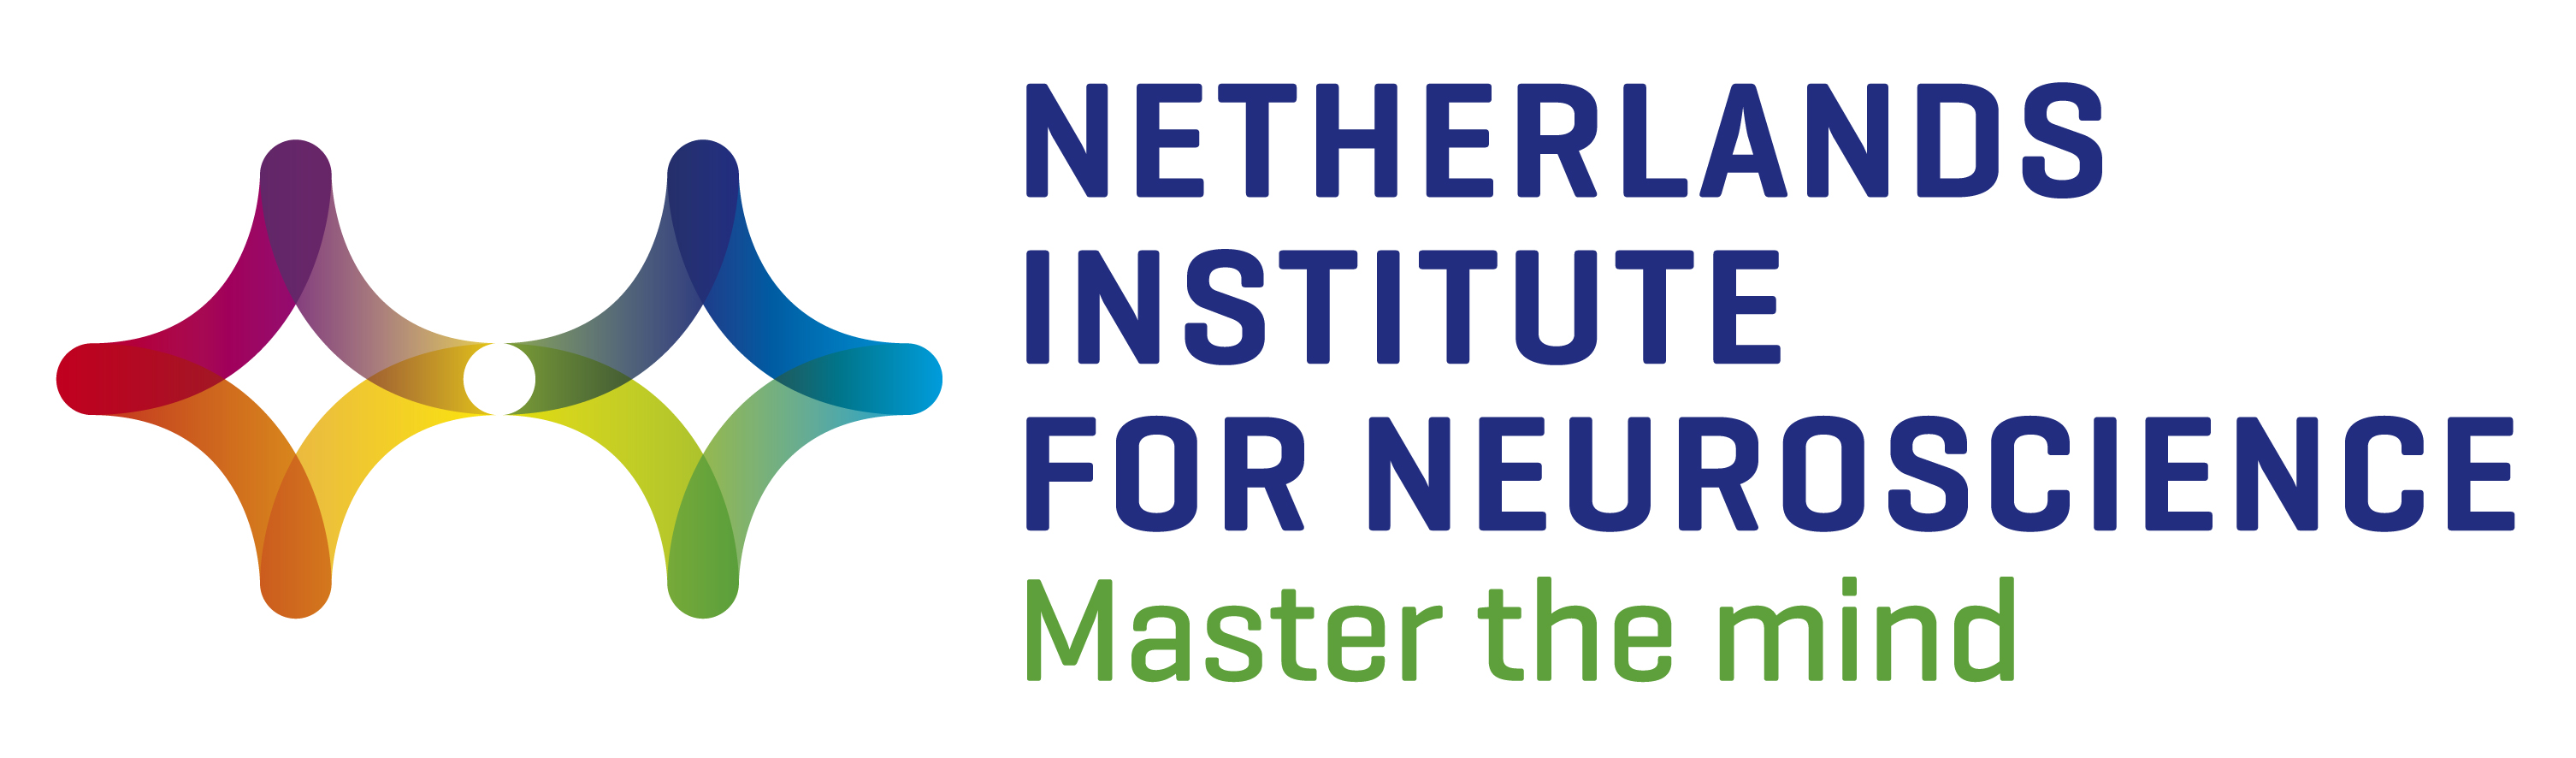 computational neuroscience phd netherlands